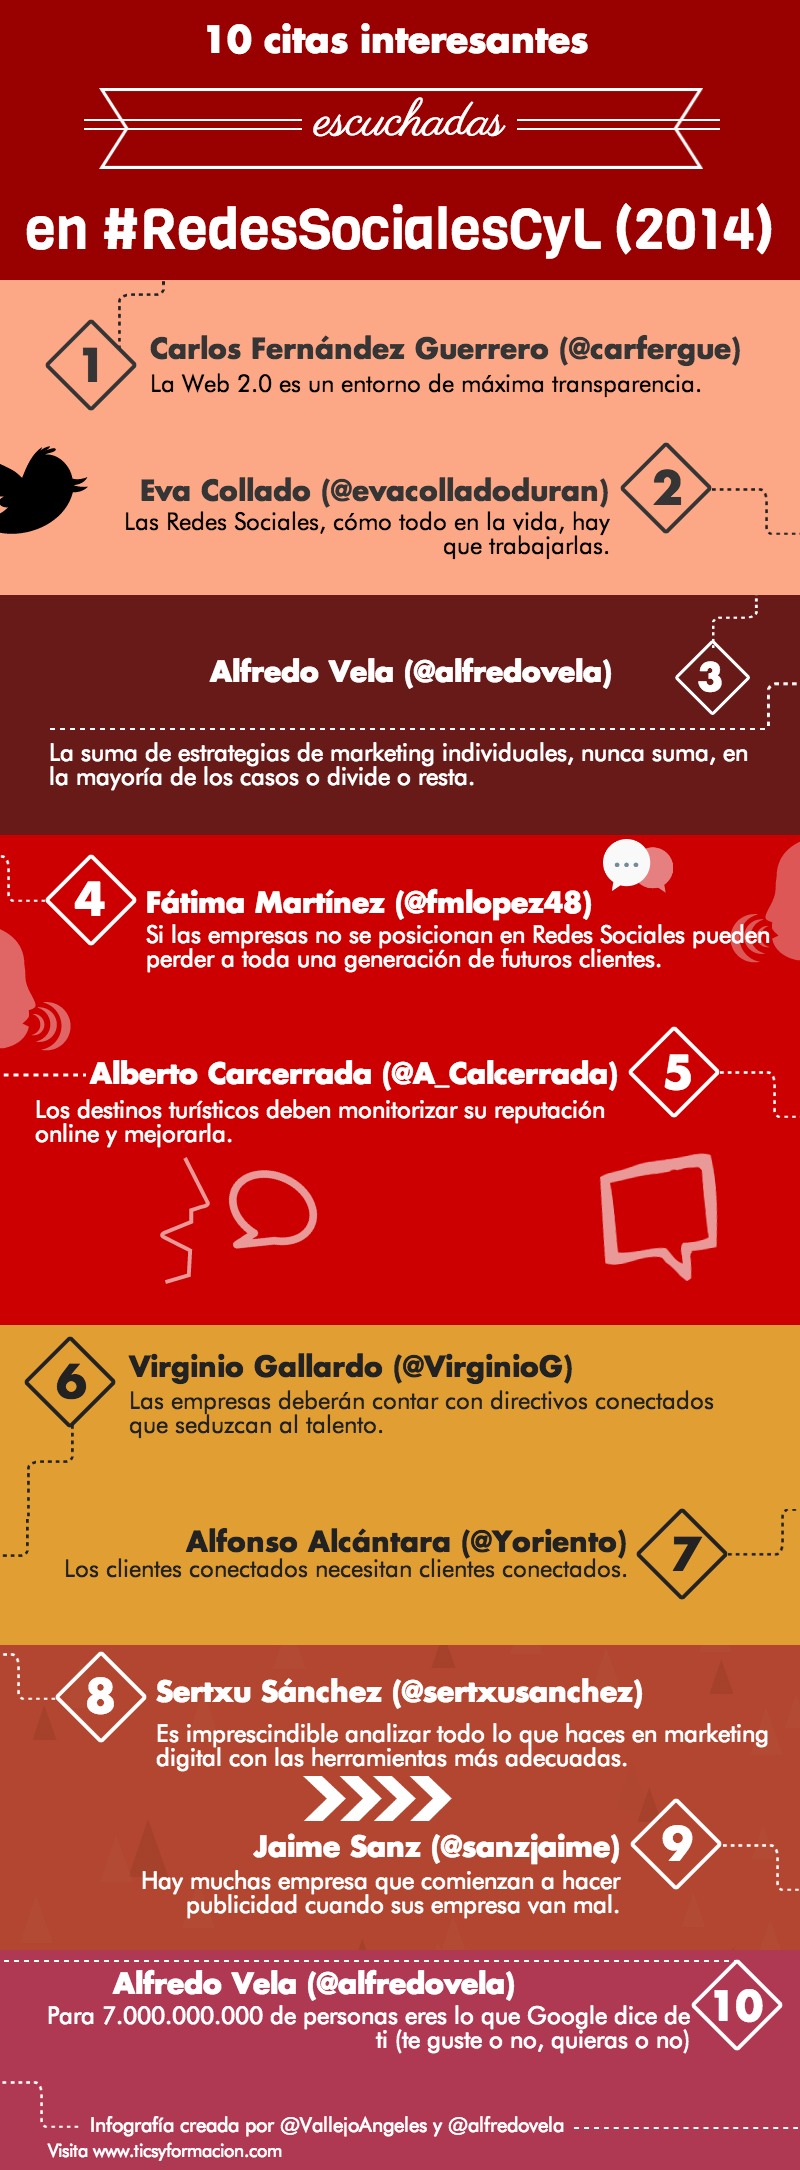 10 citas interesantes escuchadas en #RedesSociales#CyL 2014